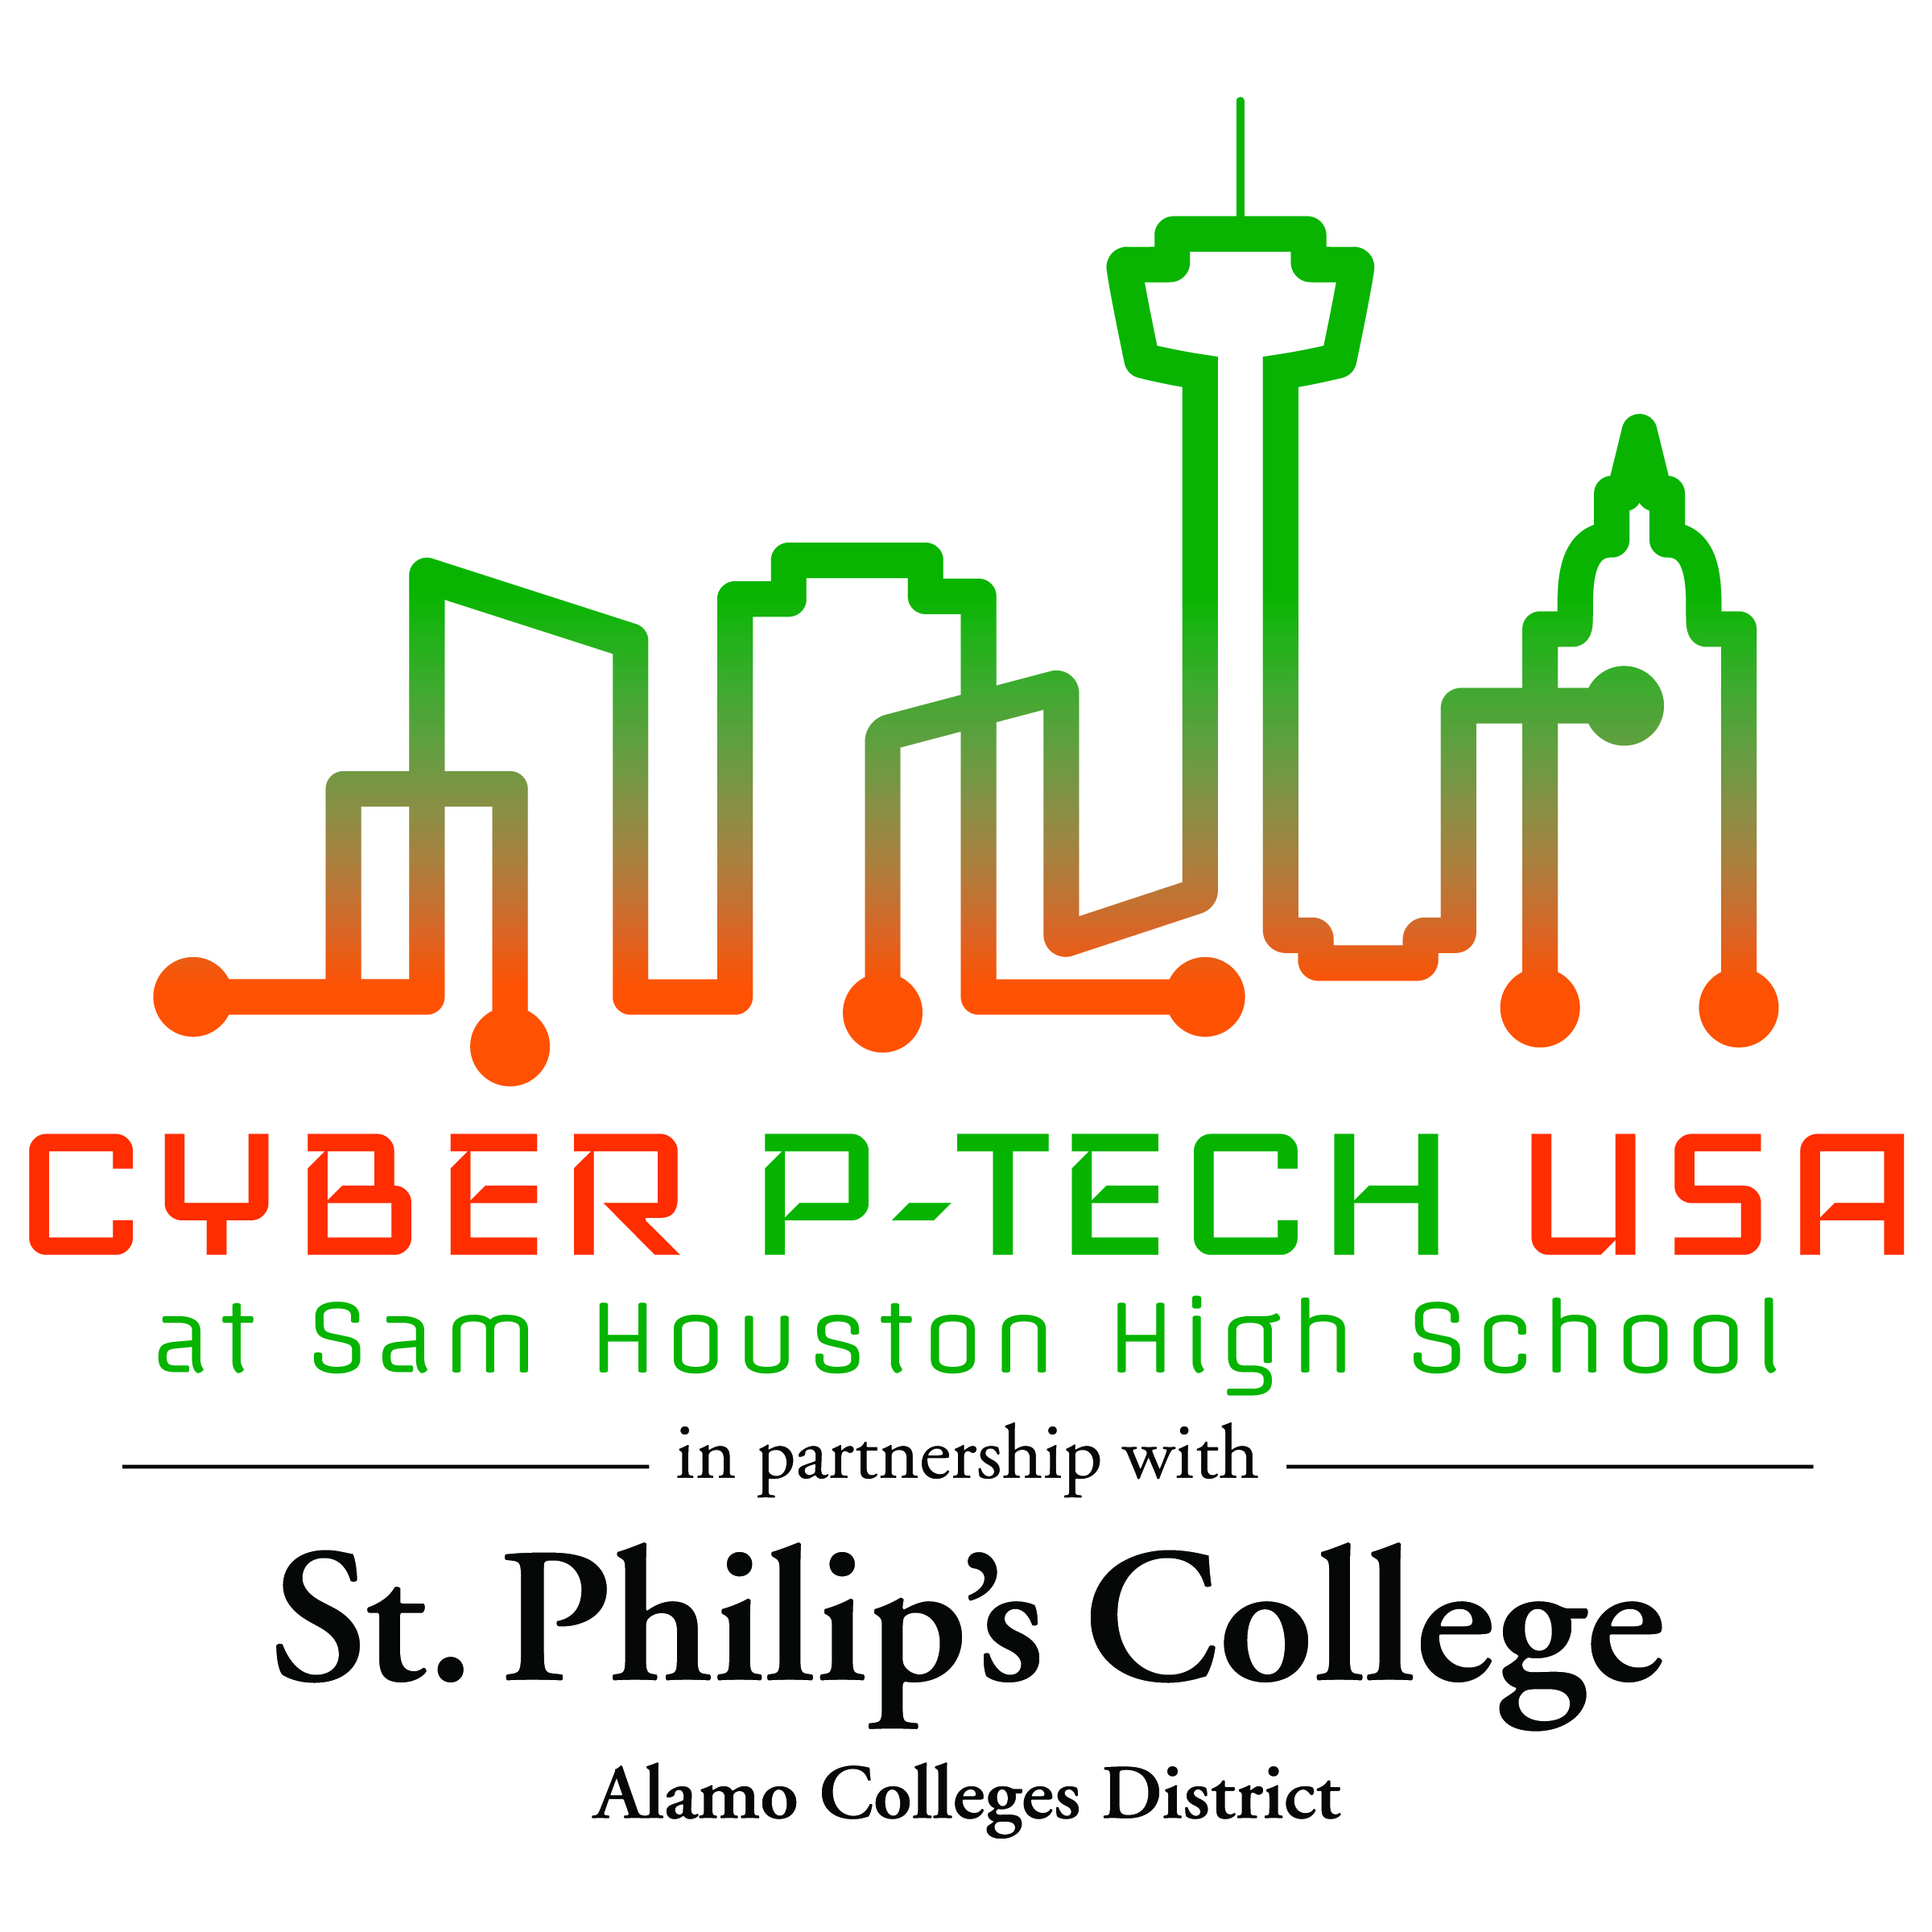 Cyber Ptech logo